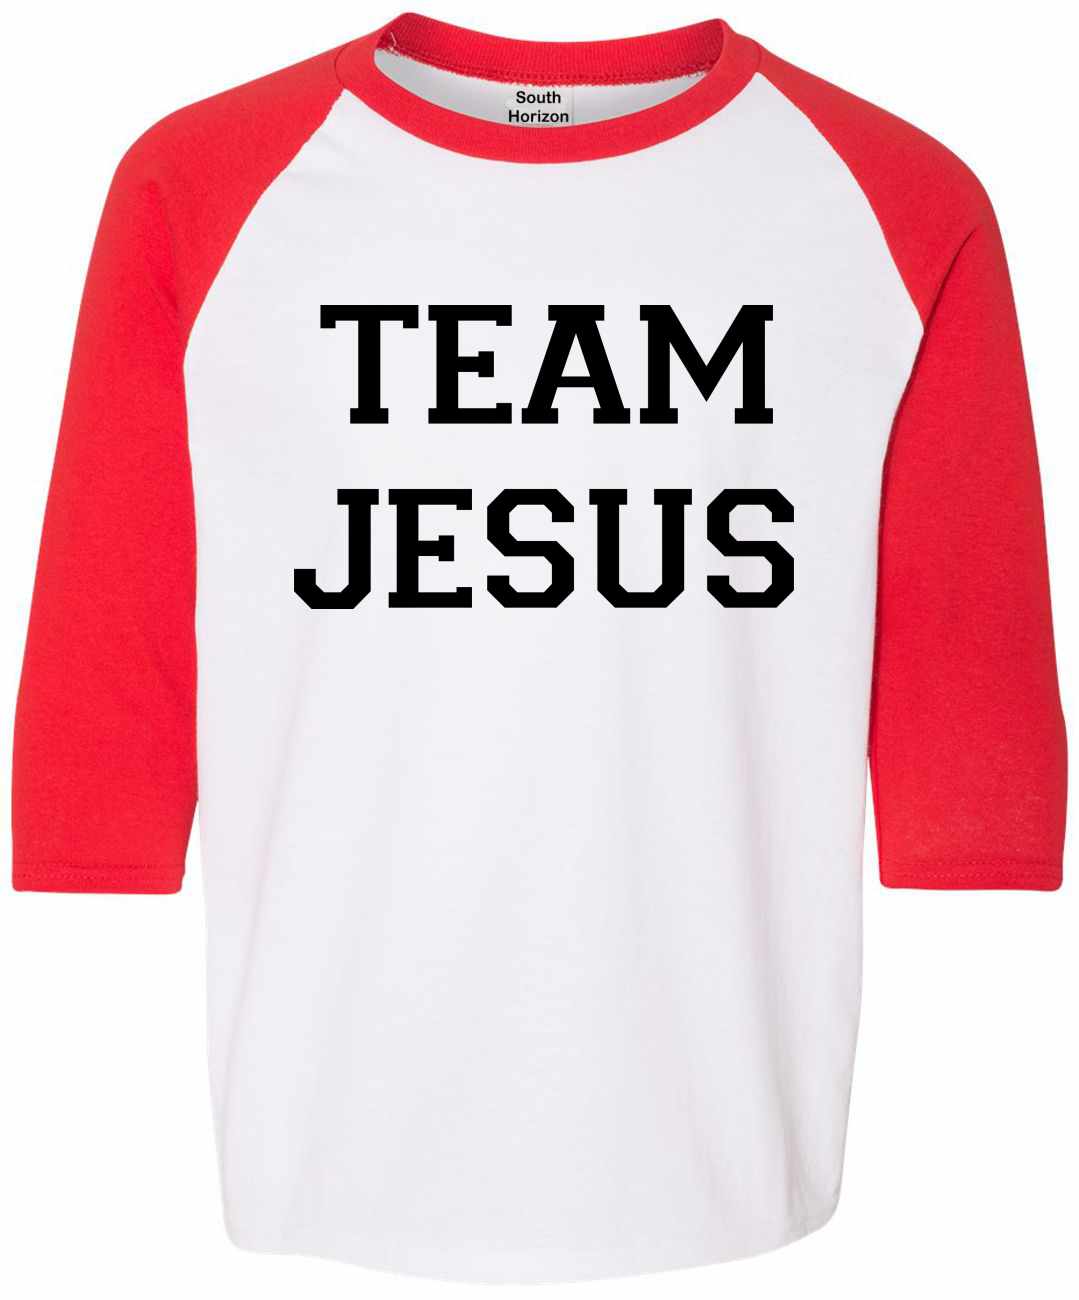 TEAM JESUS on Youth Baseball Shirt